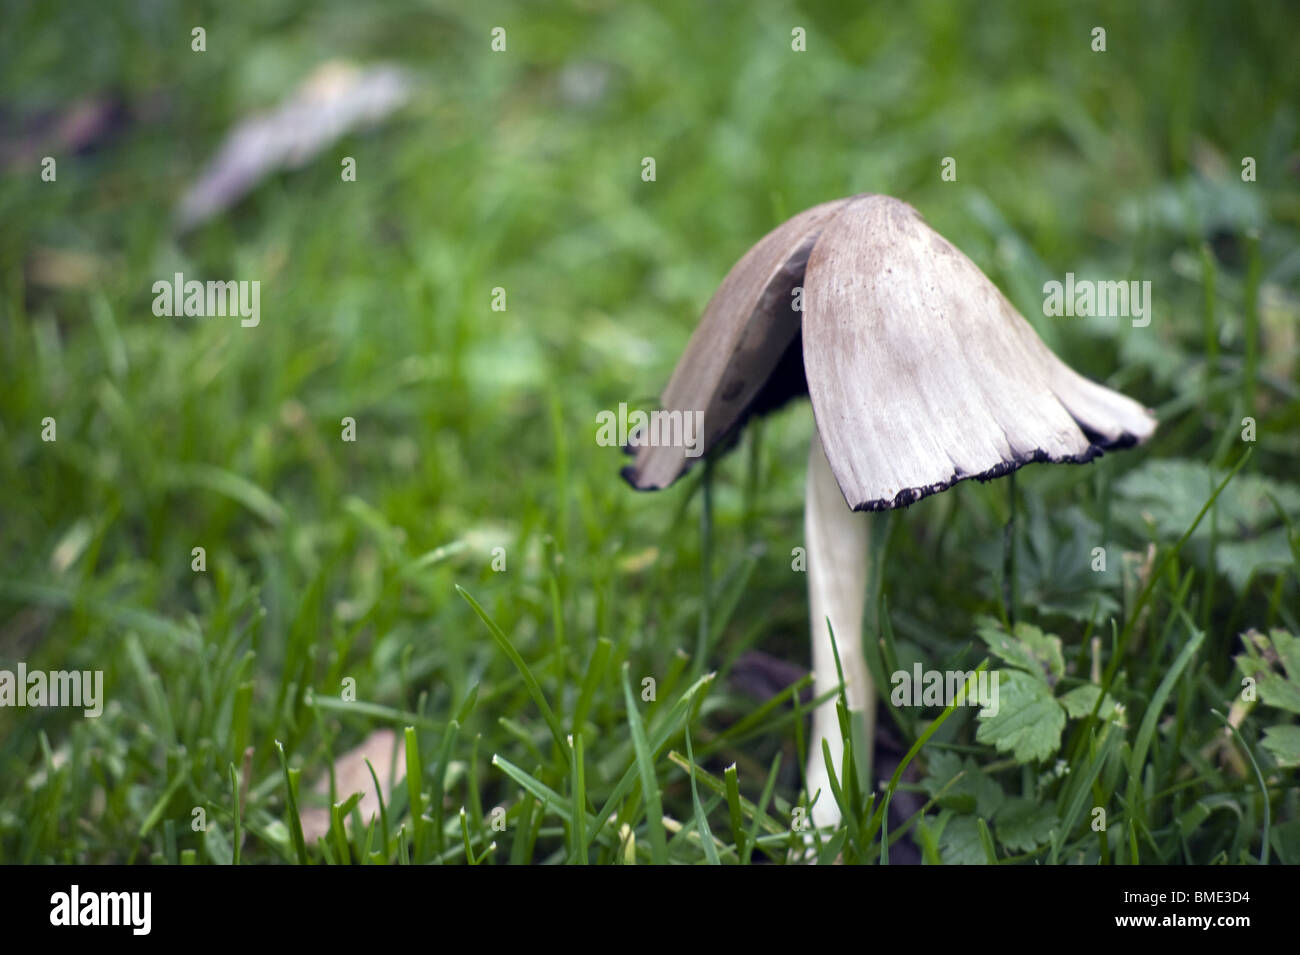 mushroom, campignon, campagne, countryside Stock Photo